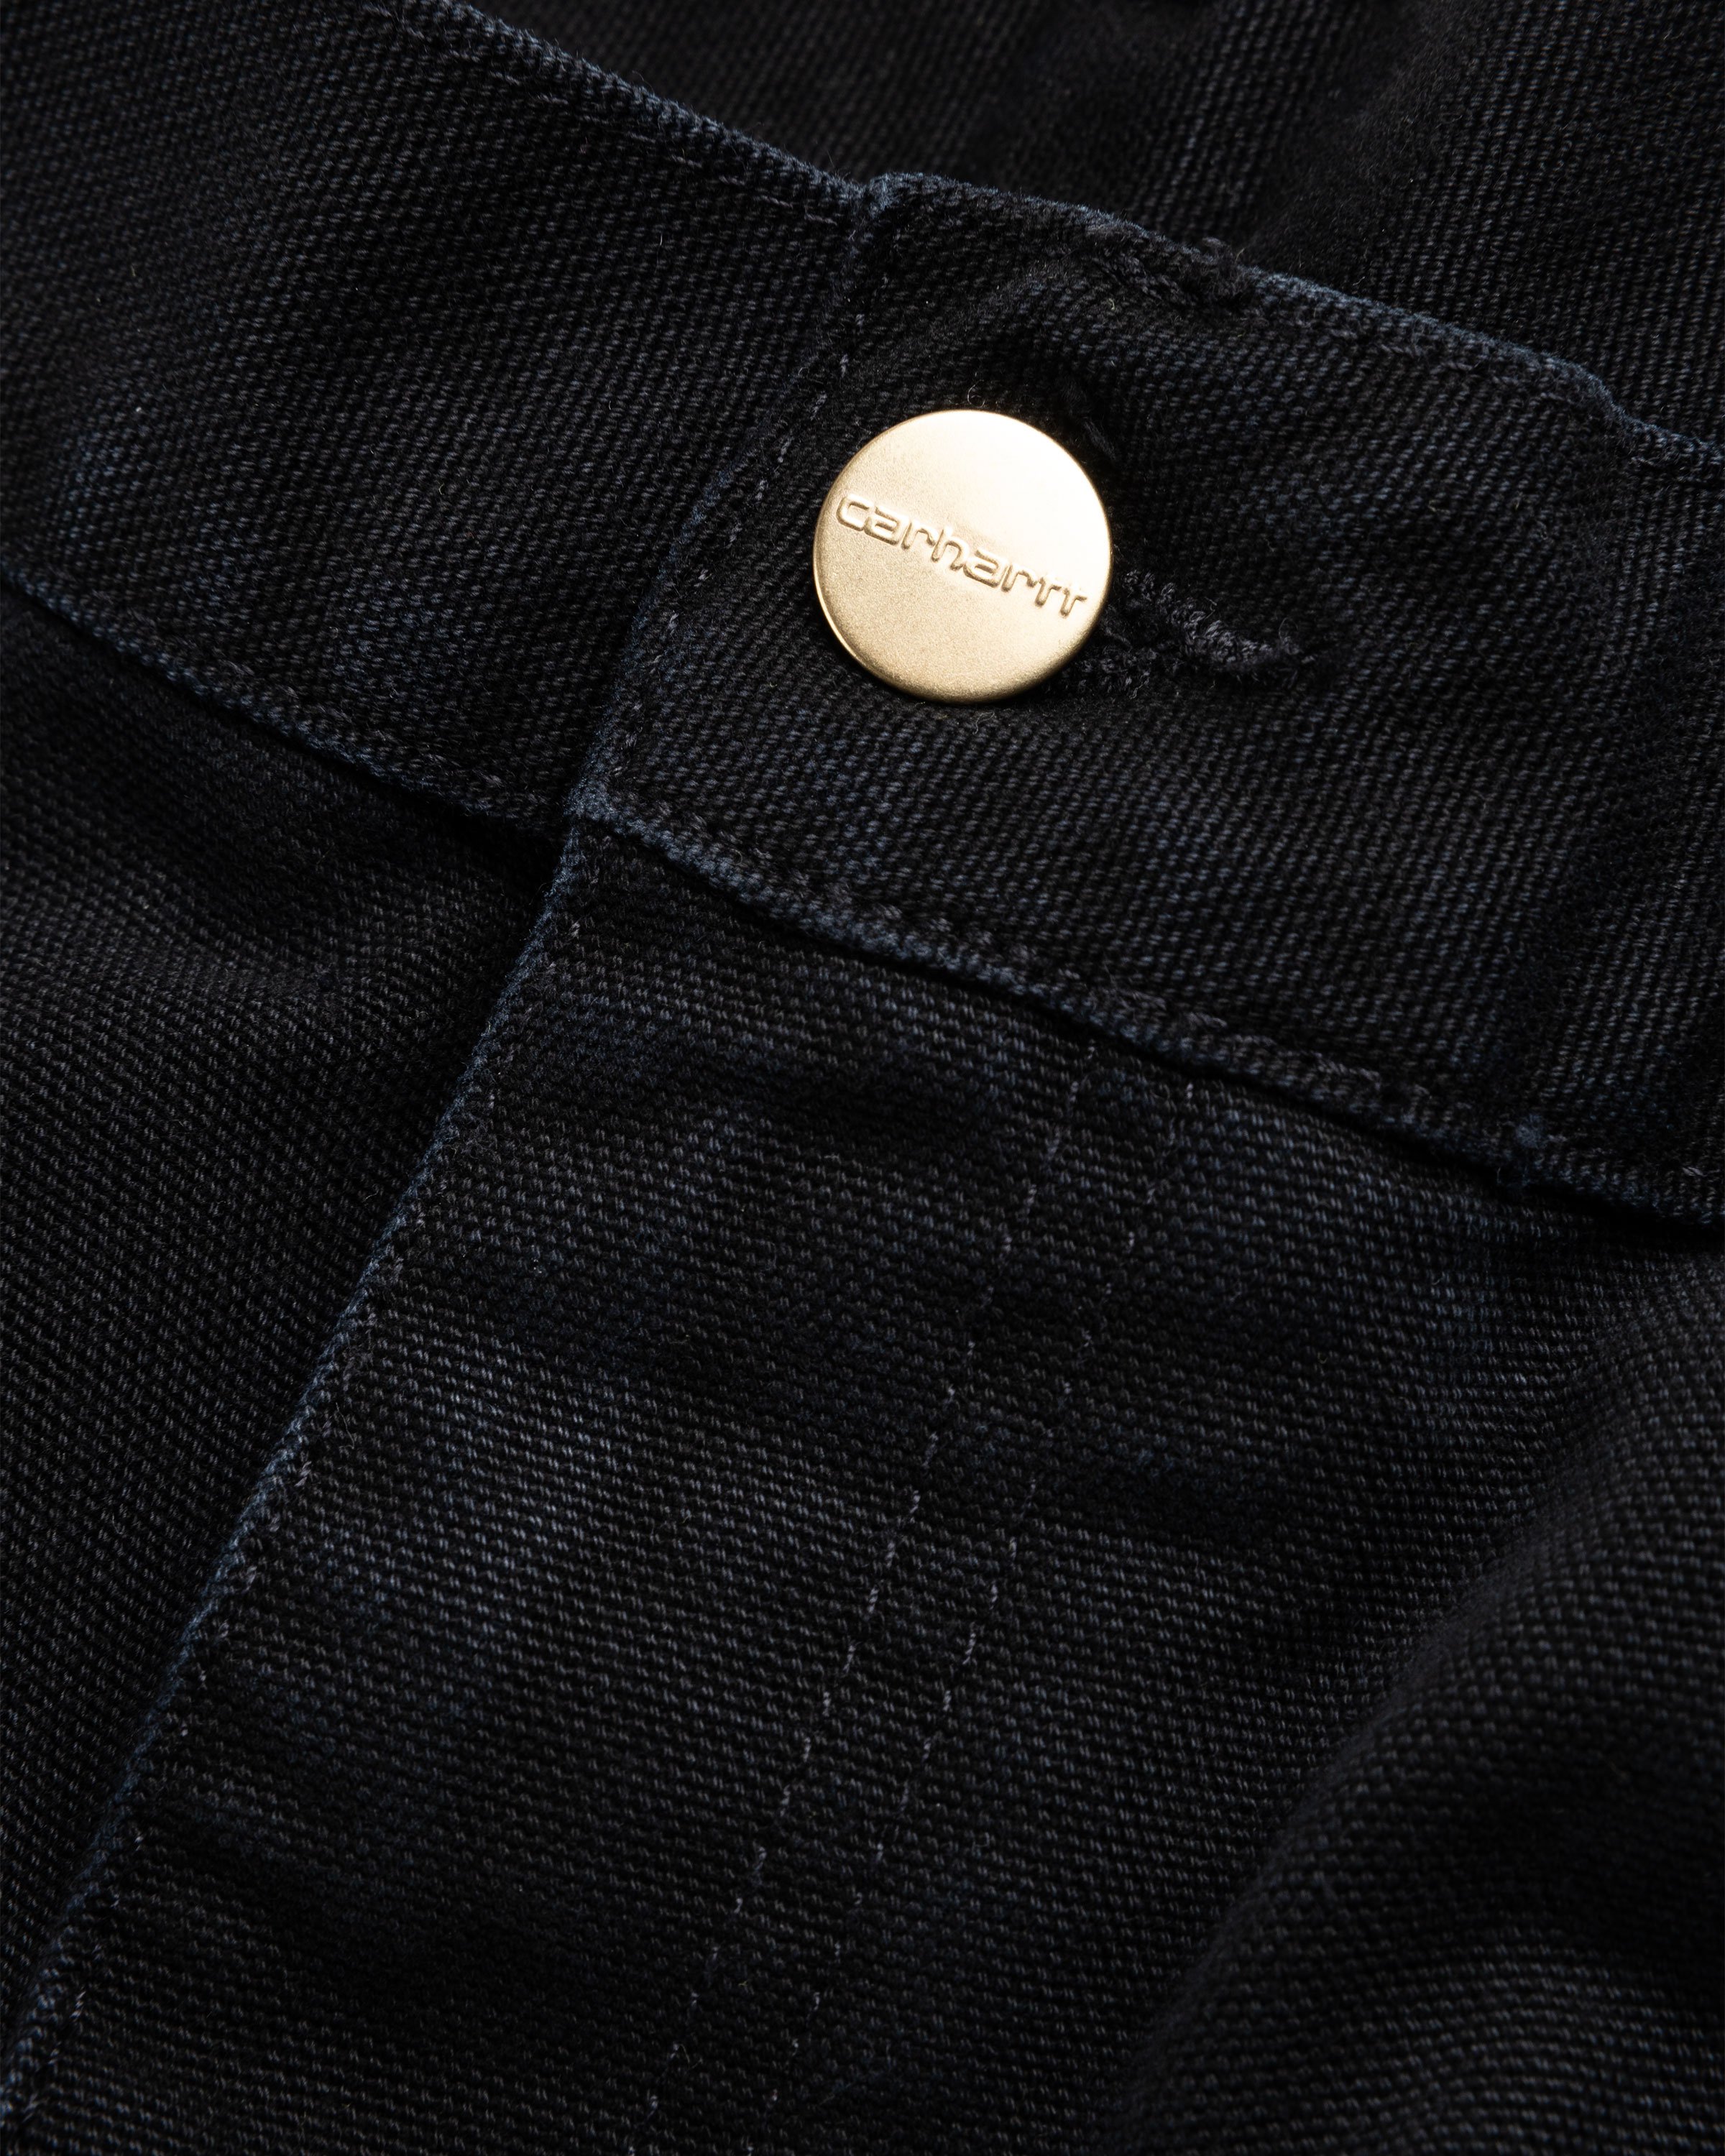 Carhartt WIP - Double Knee Pant Black - Clothing - Black - Image 5